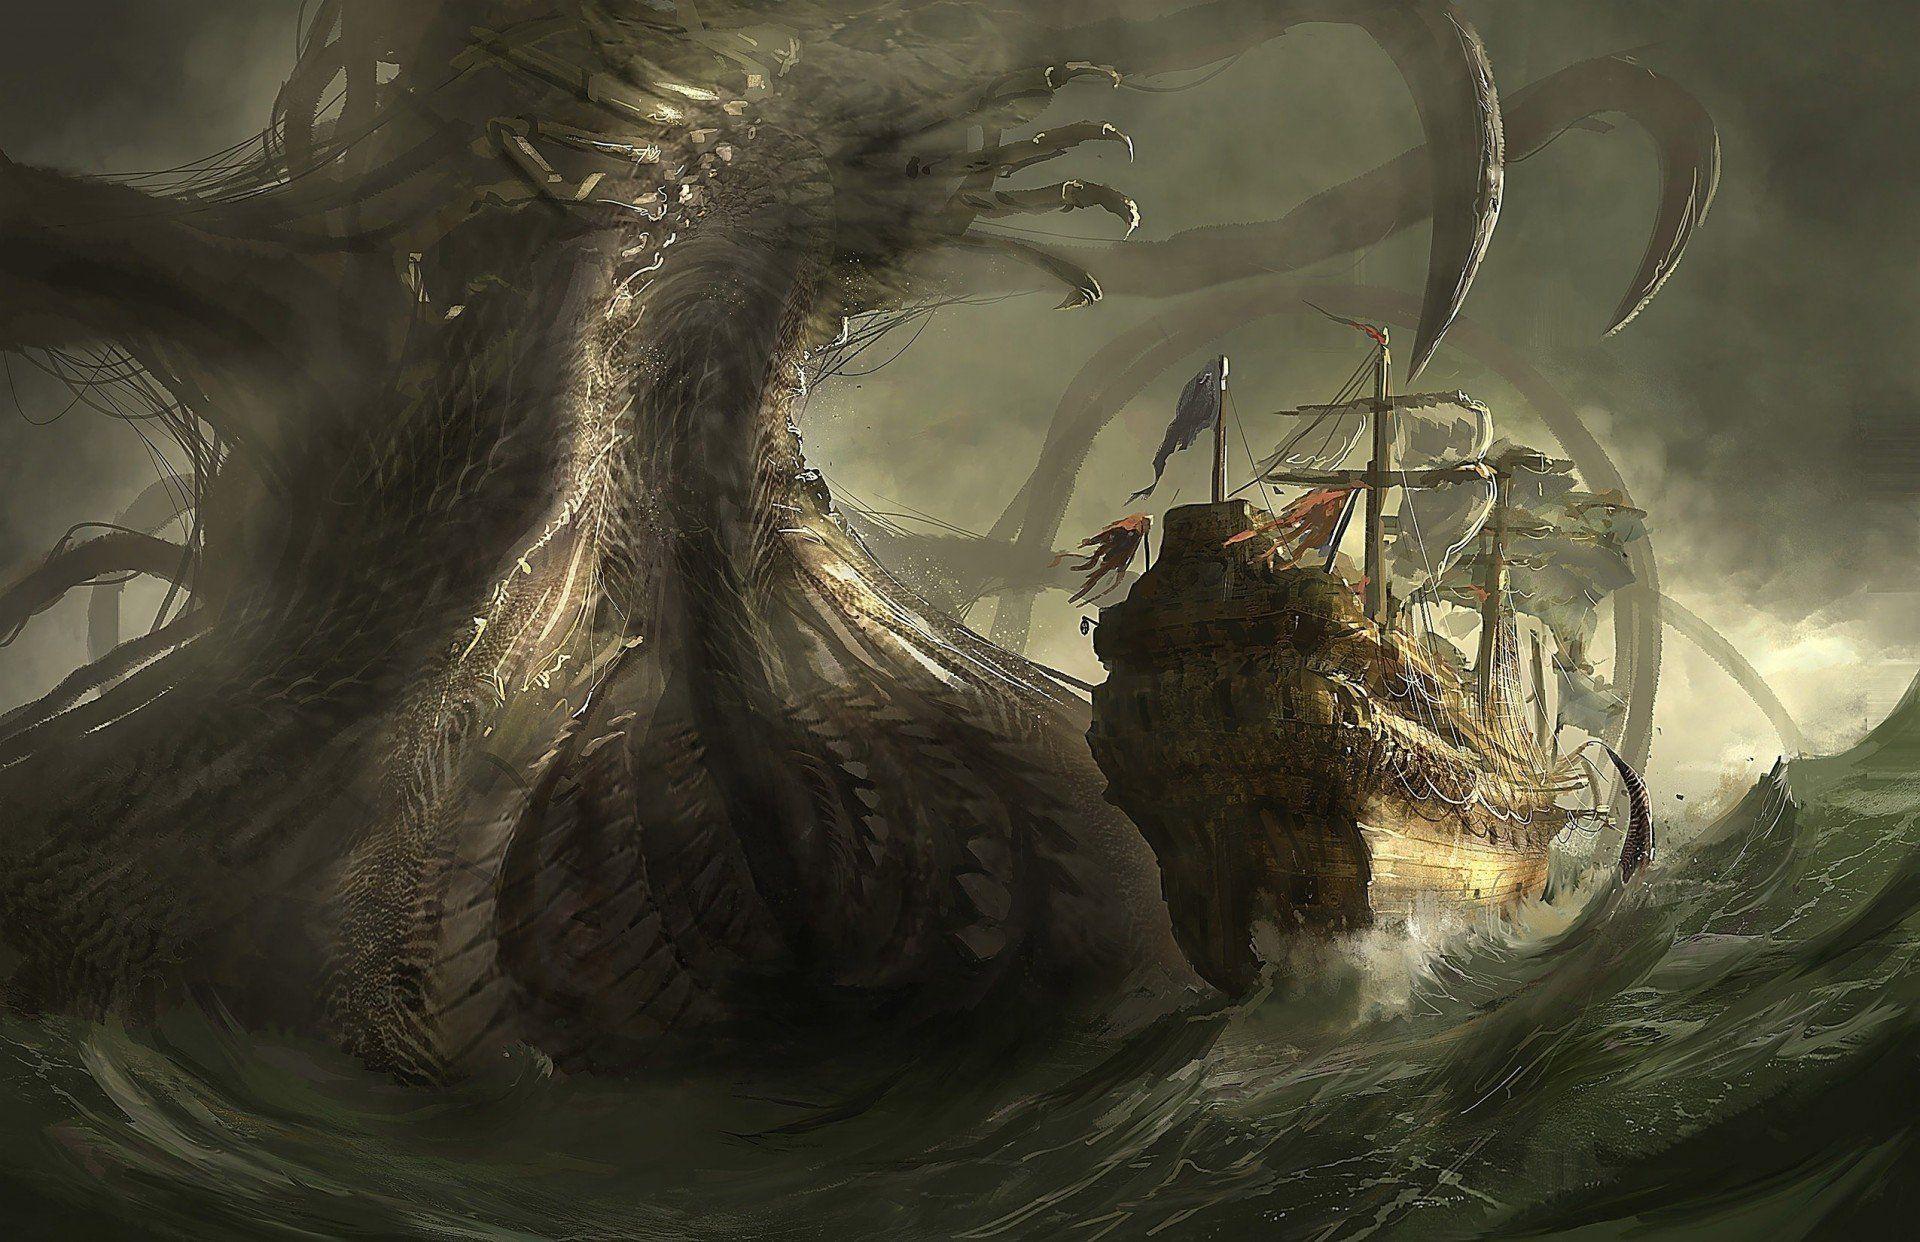 Giant Sea Monsters Image